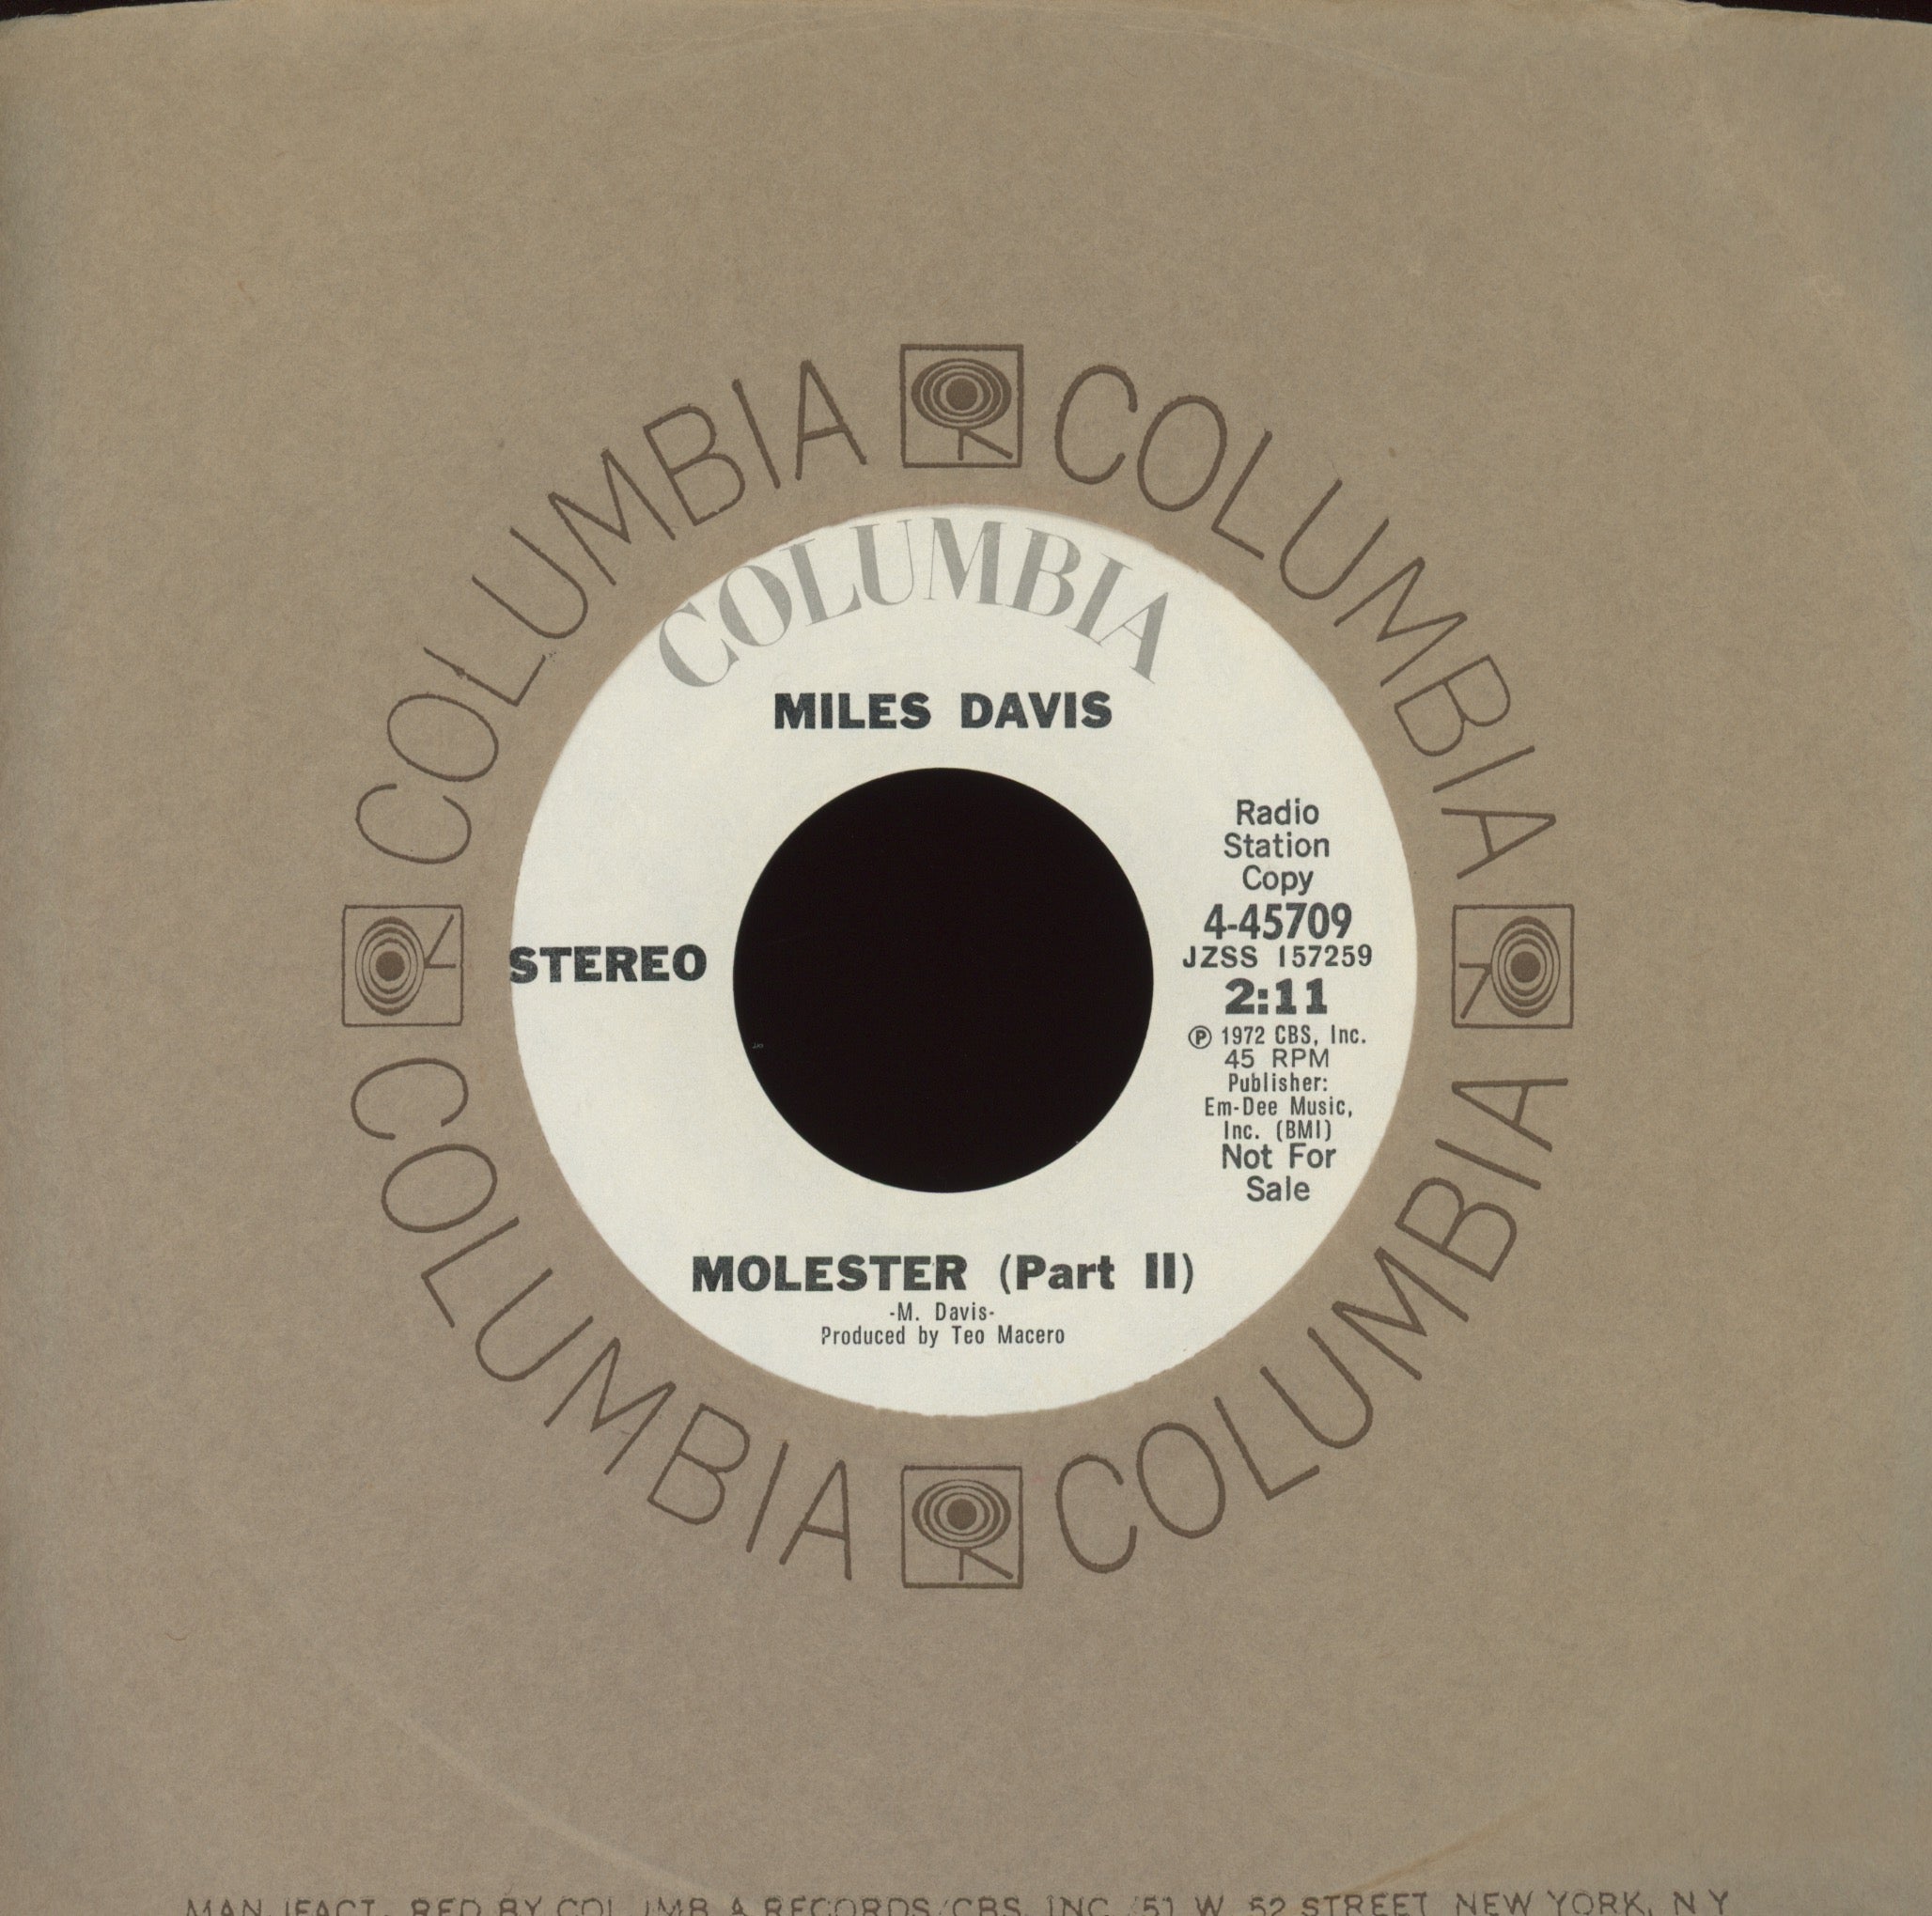 Miles Davis - Molester on Columbia Promo